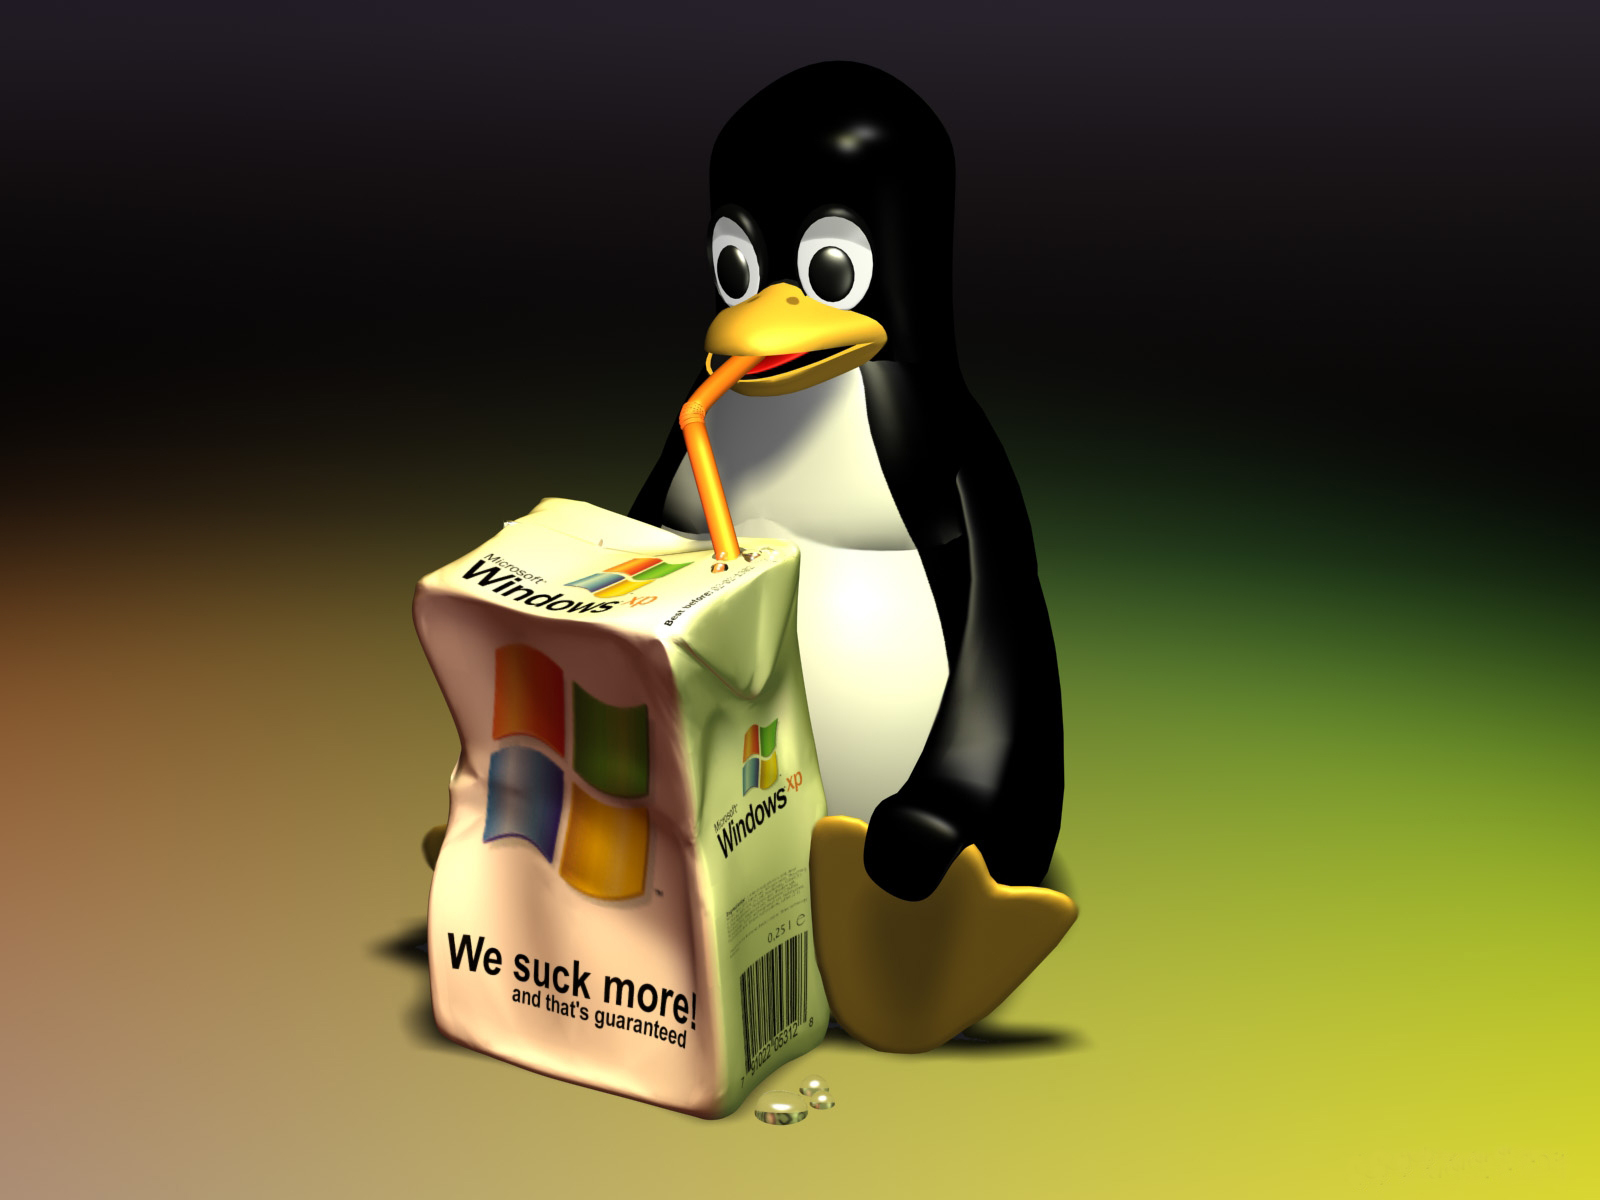 Wallpaper Linux